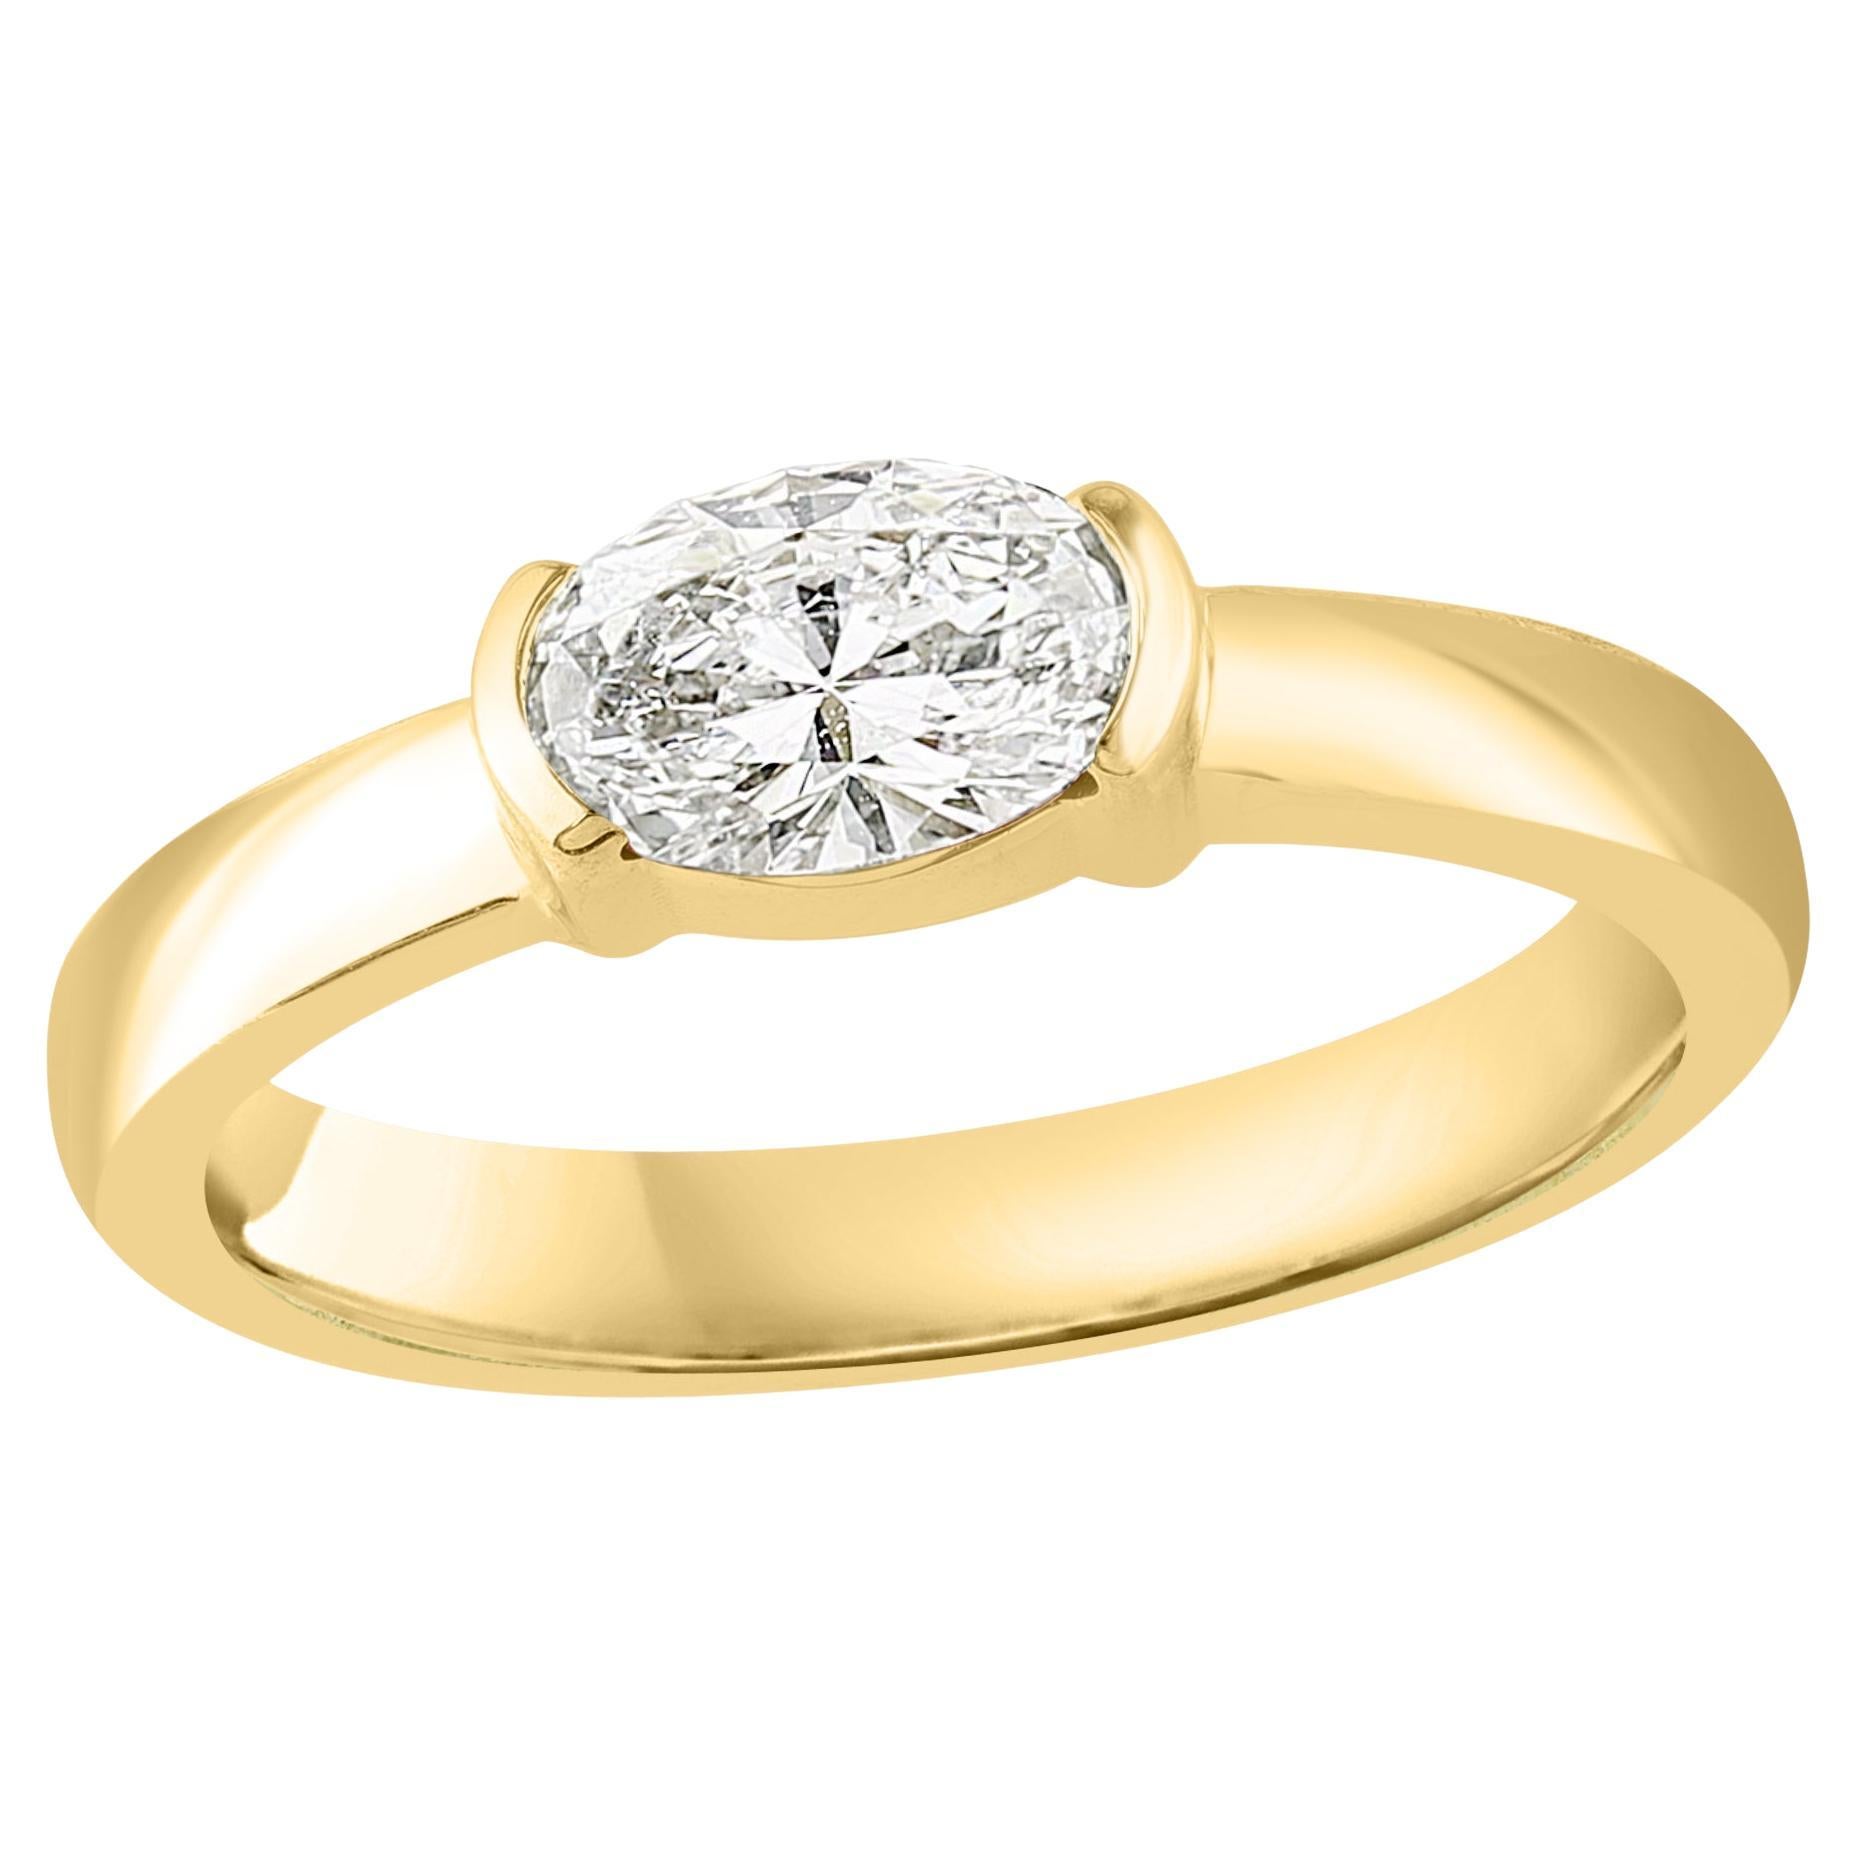 0.50 Carat Oval Cut Diamond Band Ring in 14K Yellow Gold